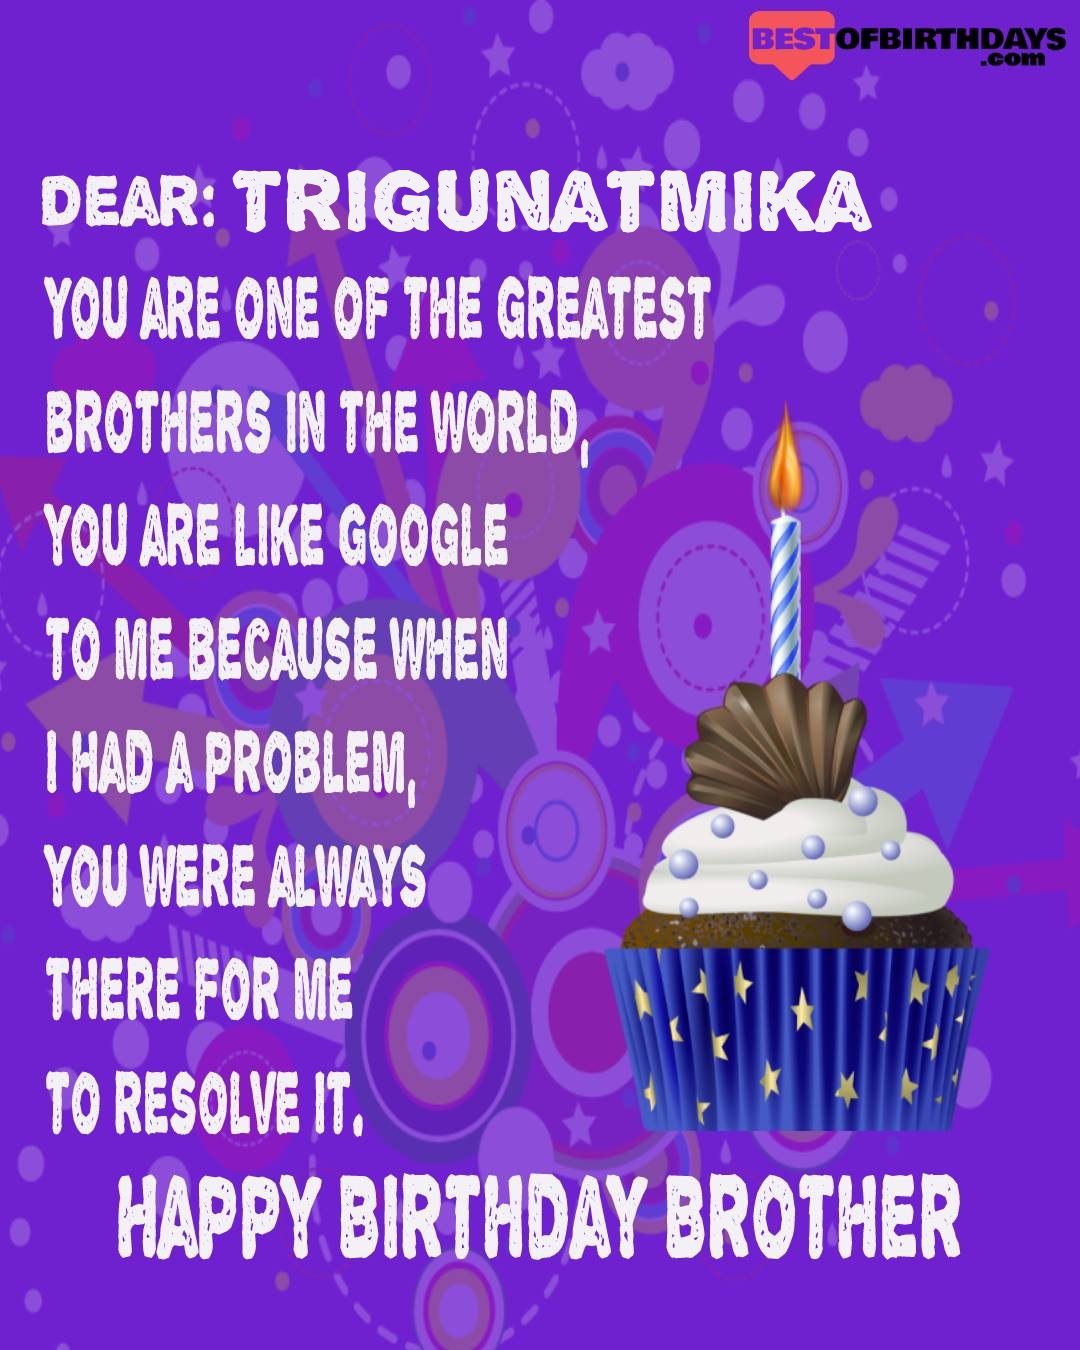 Happy birthday trigunatmika bhai brother bro